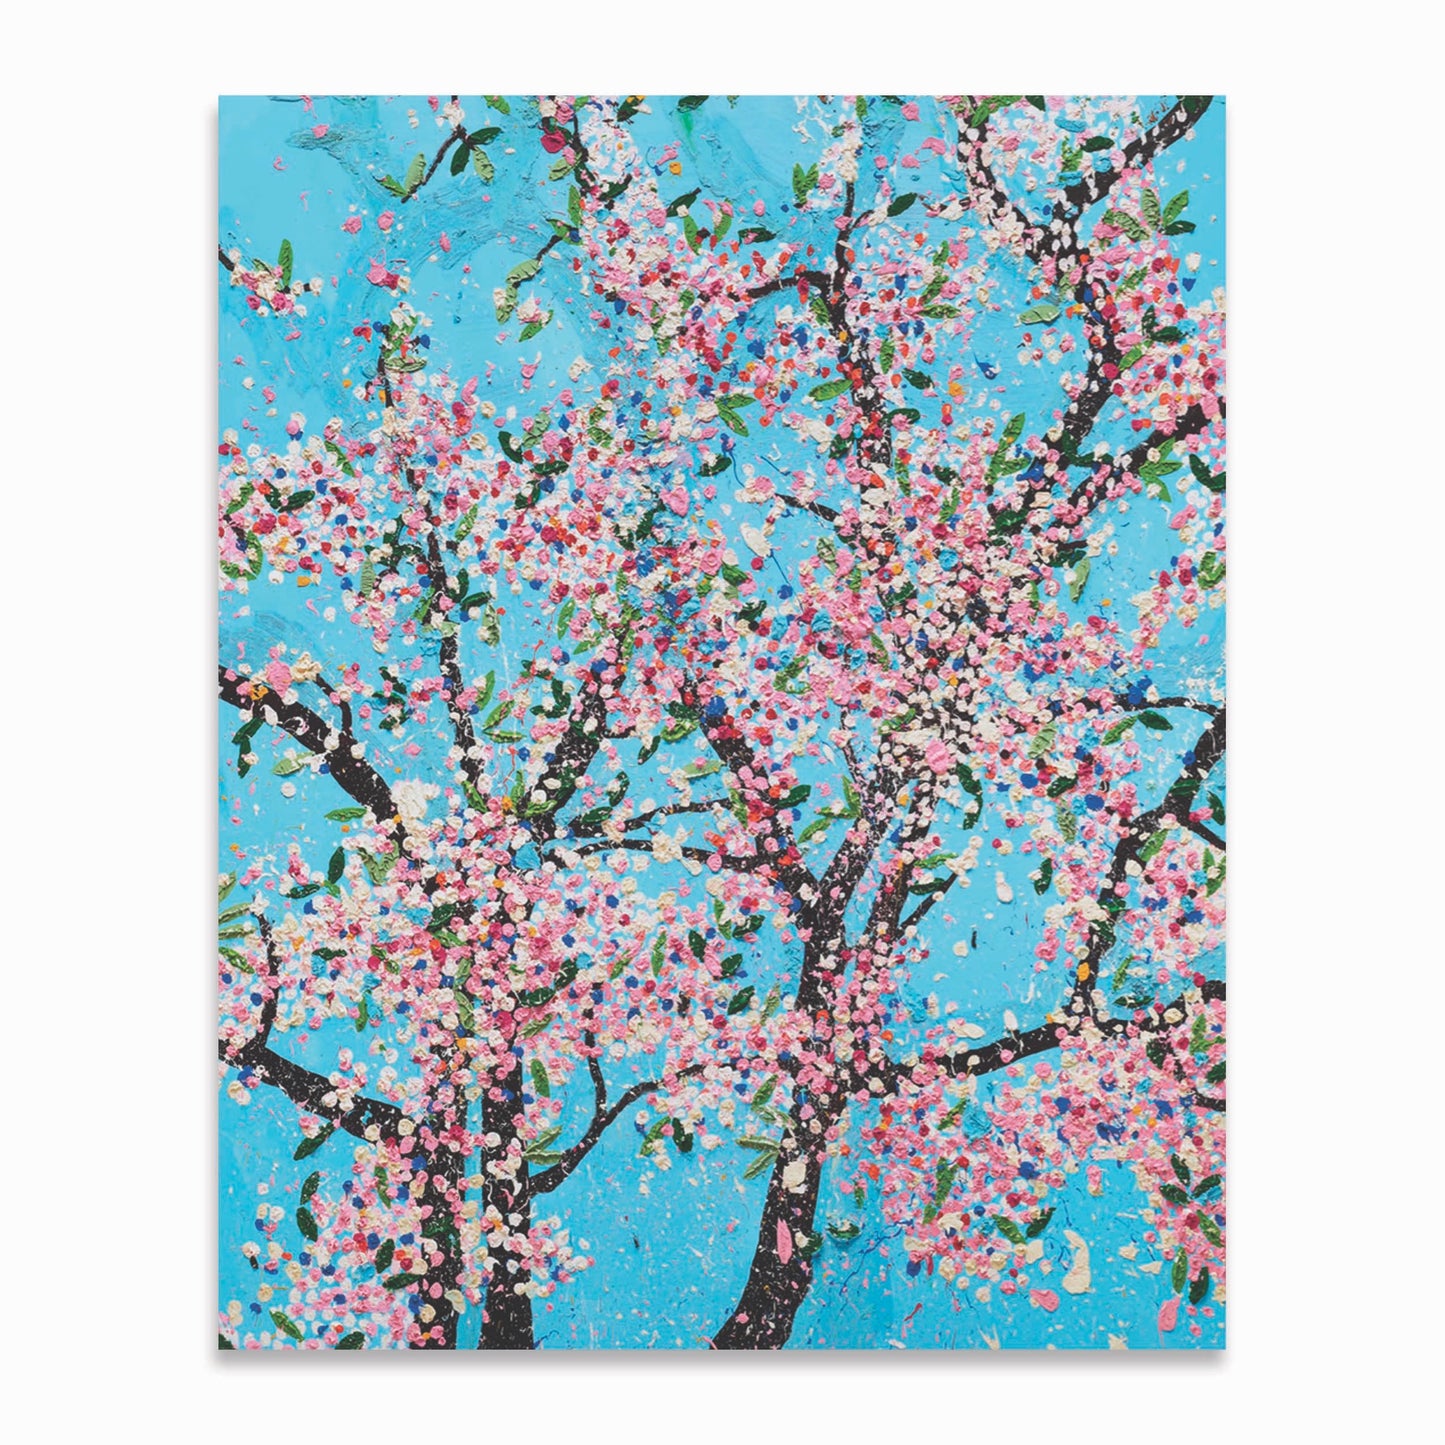 Damien Hirst, Politeness - Cherry Blossom, 2021 - Smolensky Gallery